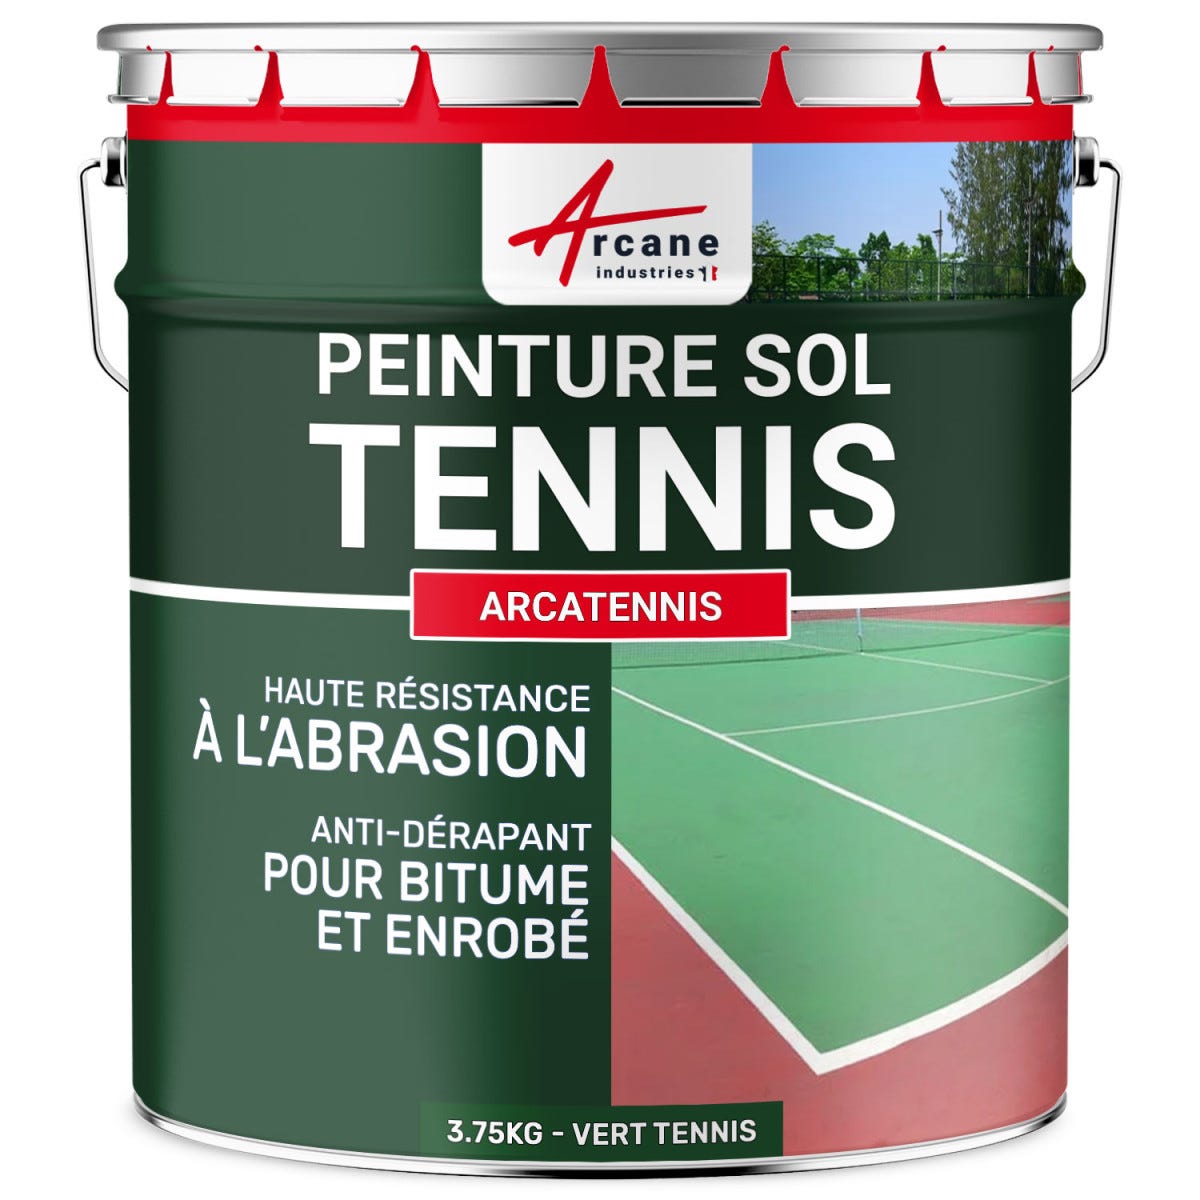 PEINTURE TENNIS - ARCATENNIS. Vert Tennis - 3.75 kg (jusqu a 7.5 m² en 2 couches)ARCANE INDUSTRIES 0